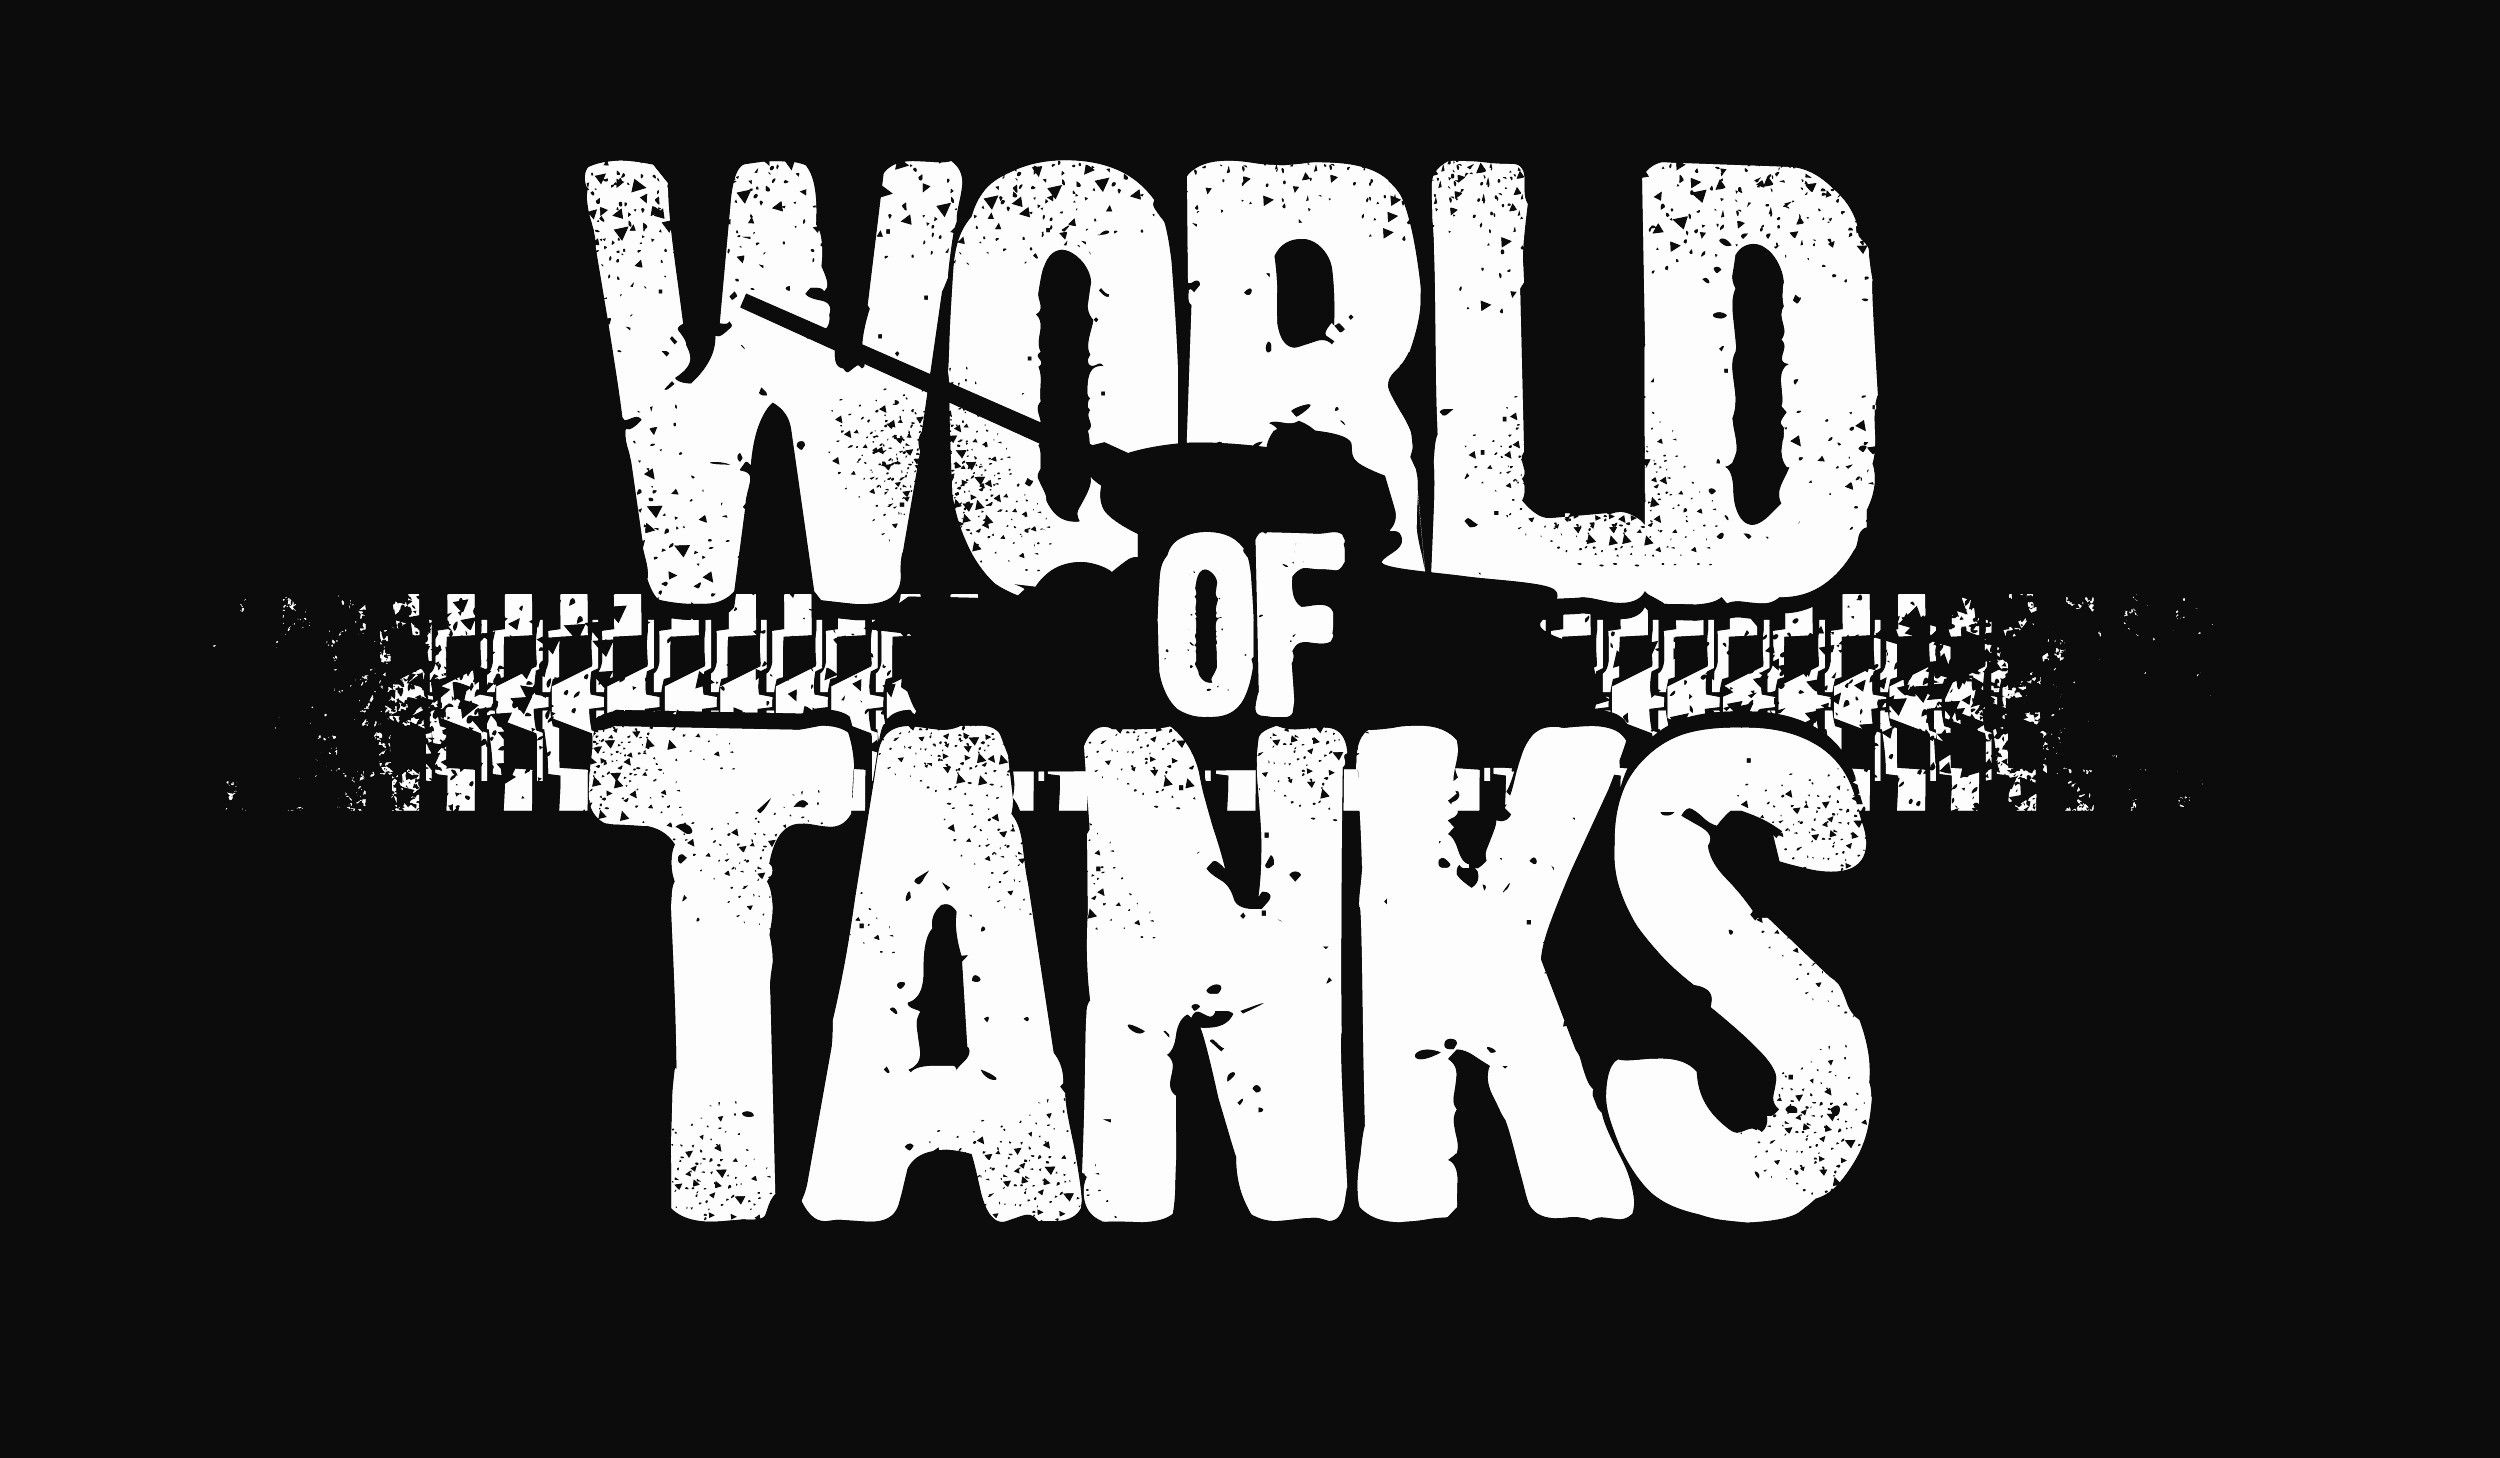 World of Tanks от 3000 боёв с Premium танками